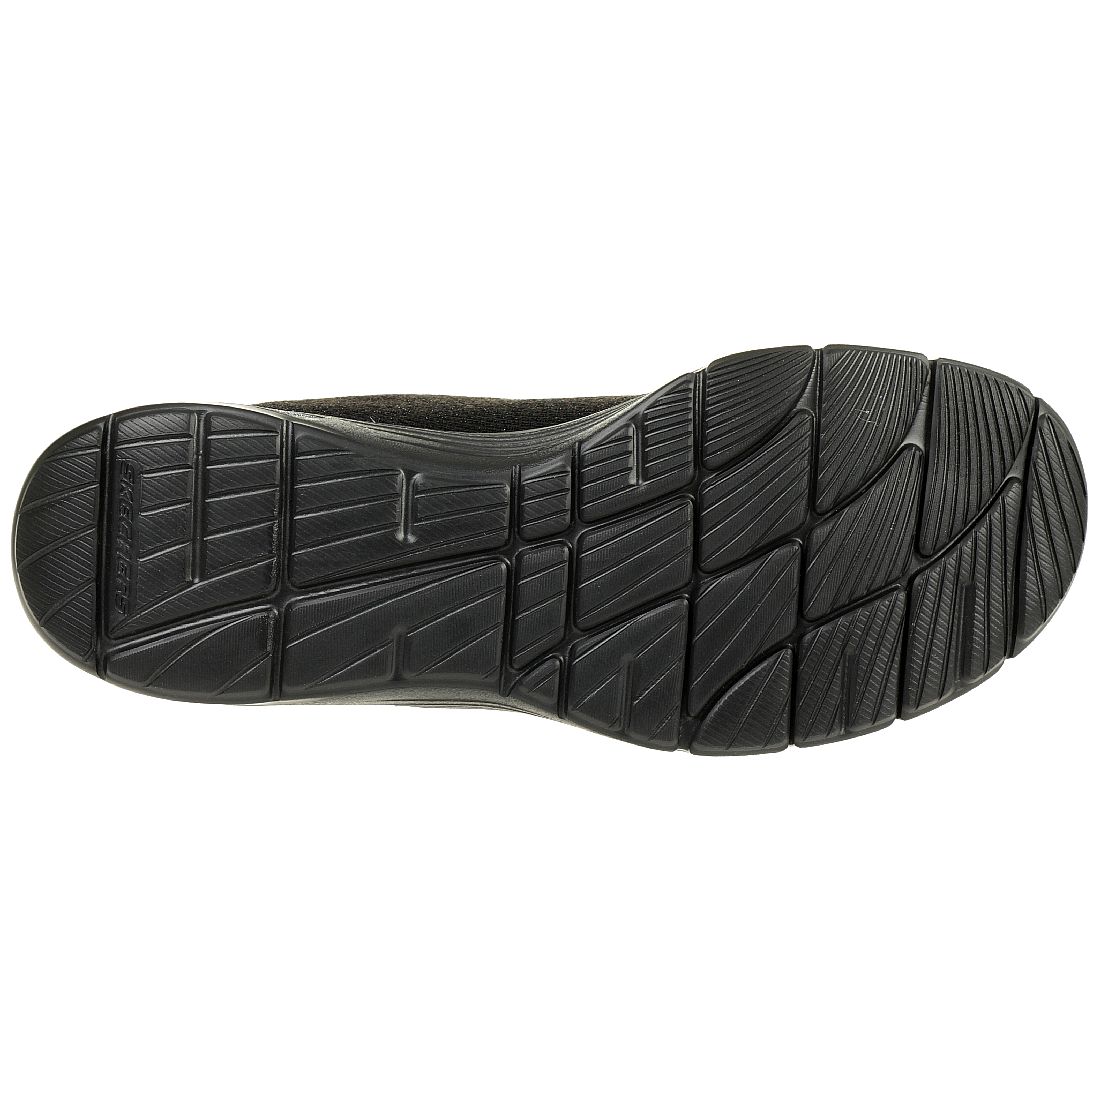 Skechers Relaxed Fit EMPIRE D'LUX - BURN BRIGHT Damen Sneaker Air cooled Memory Foam schwarz 12822